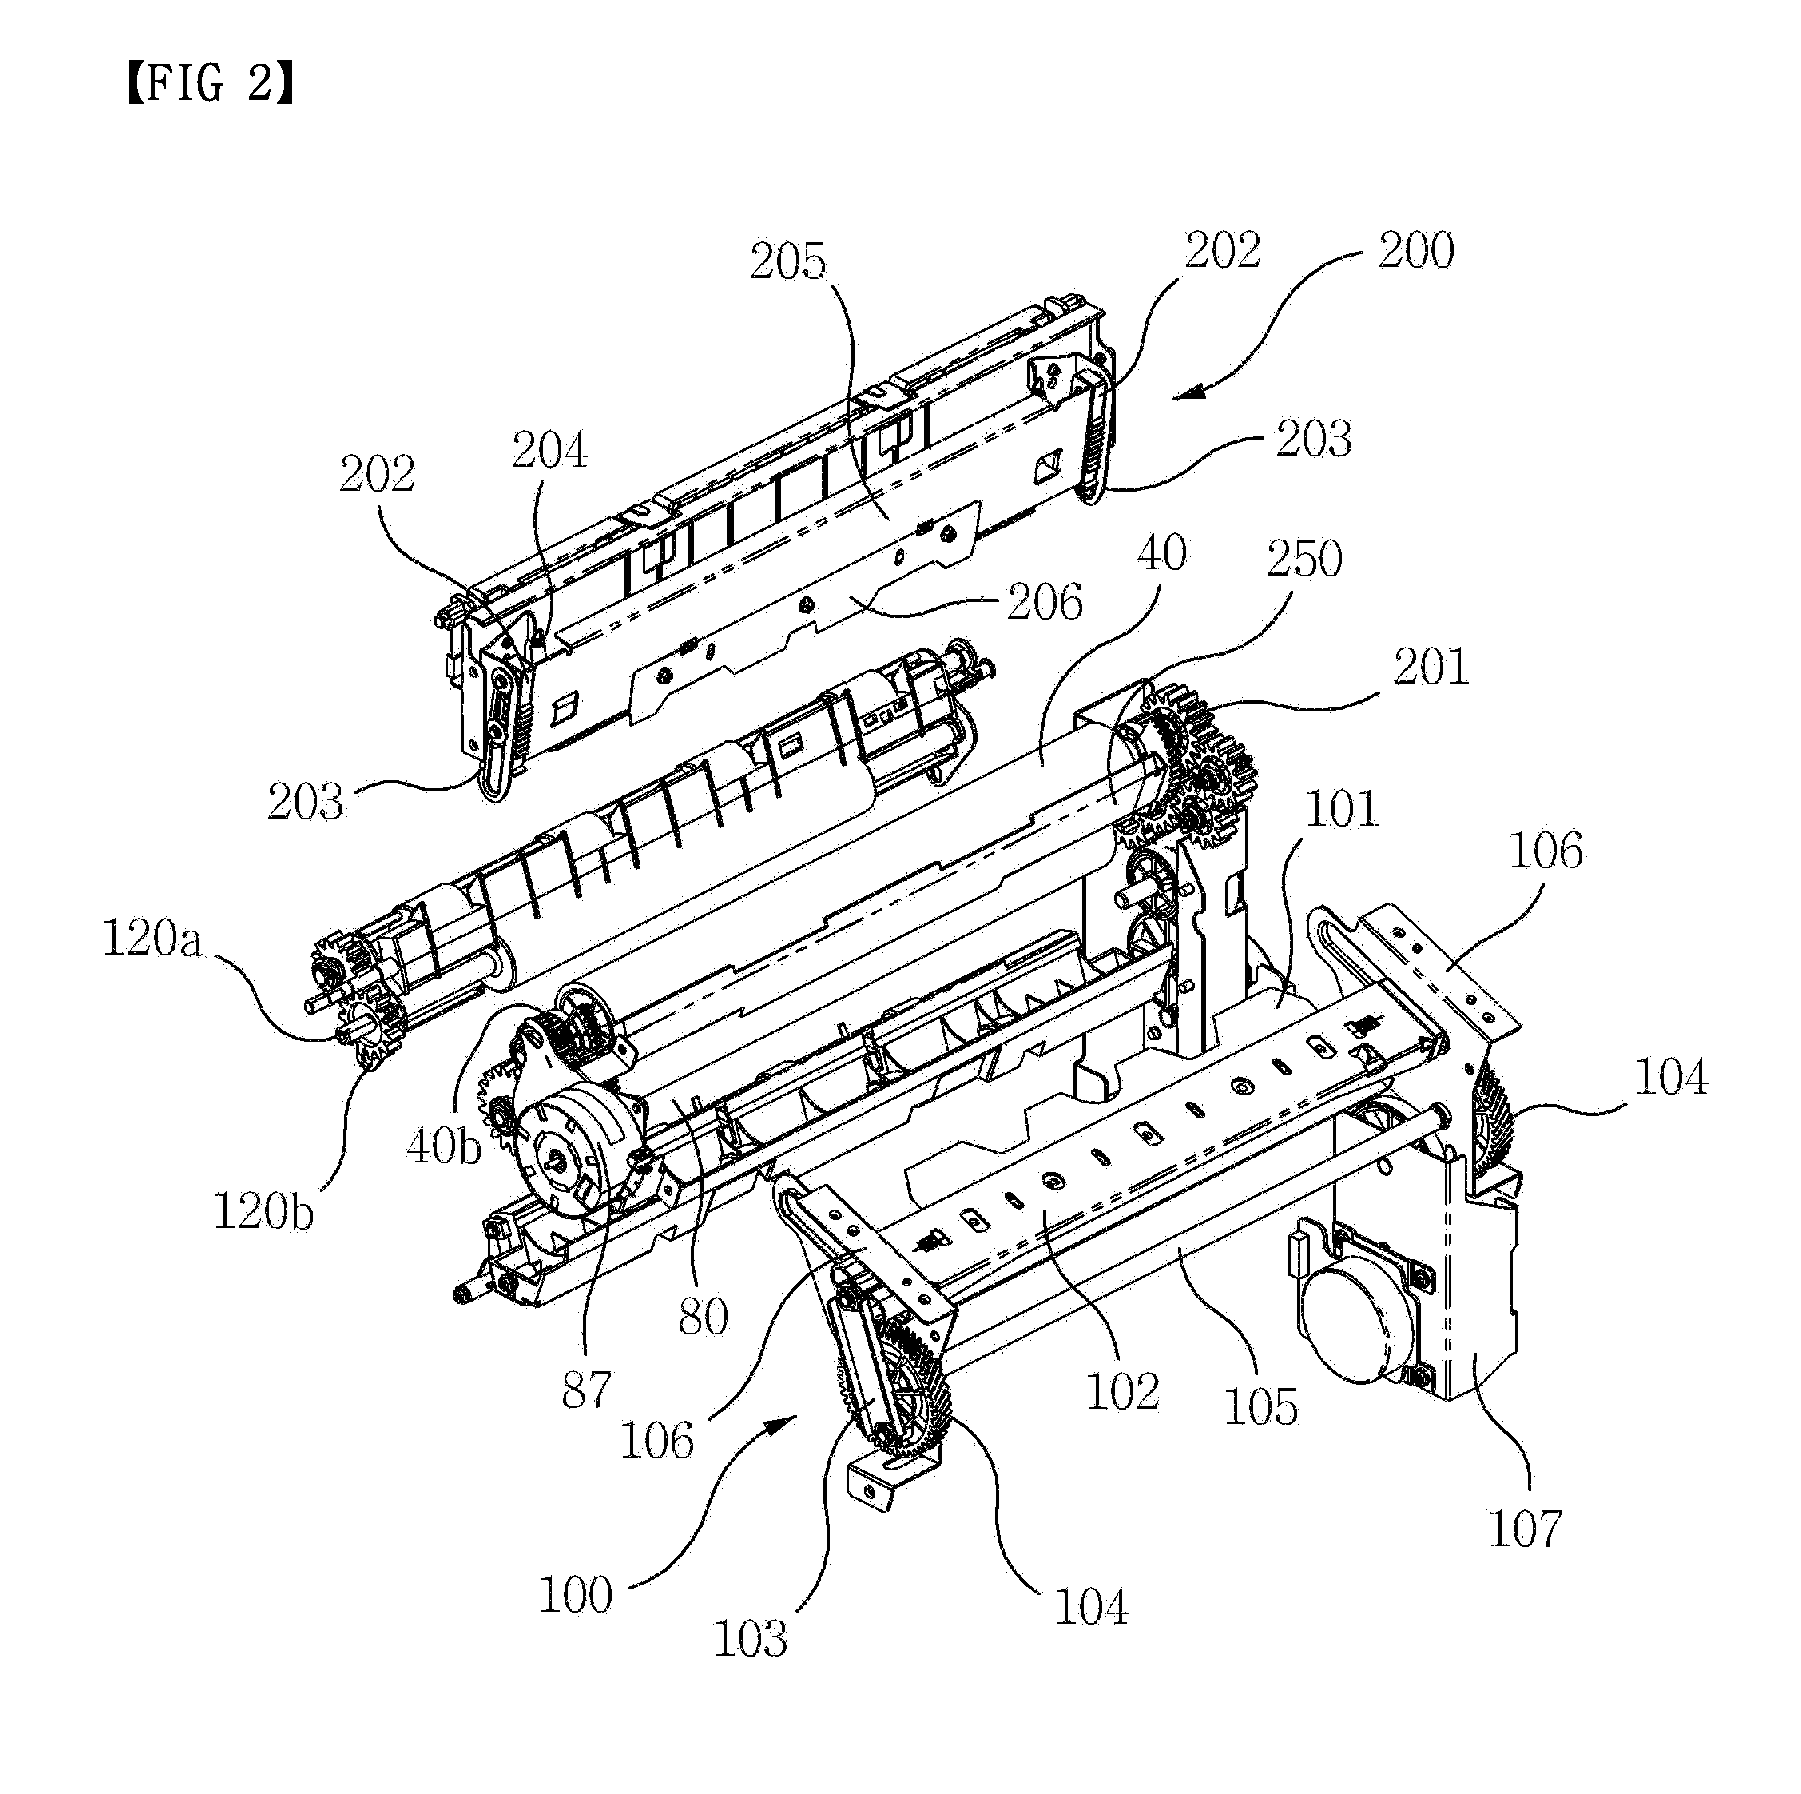 Paper folding apparatus for binding machine